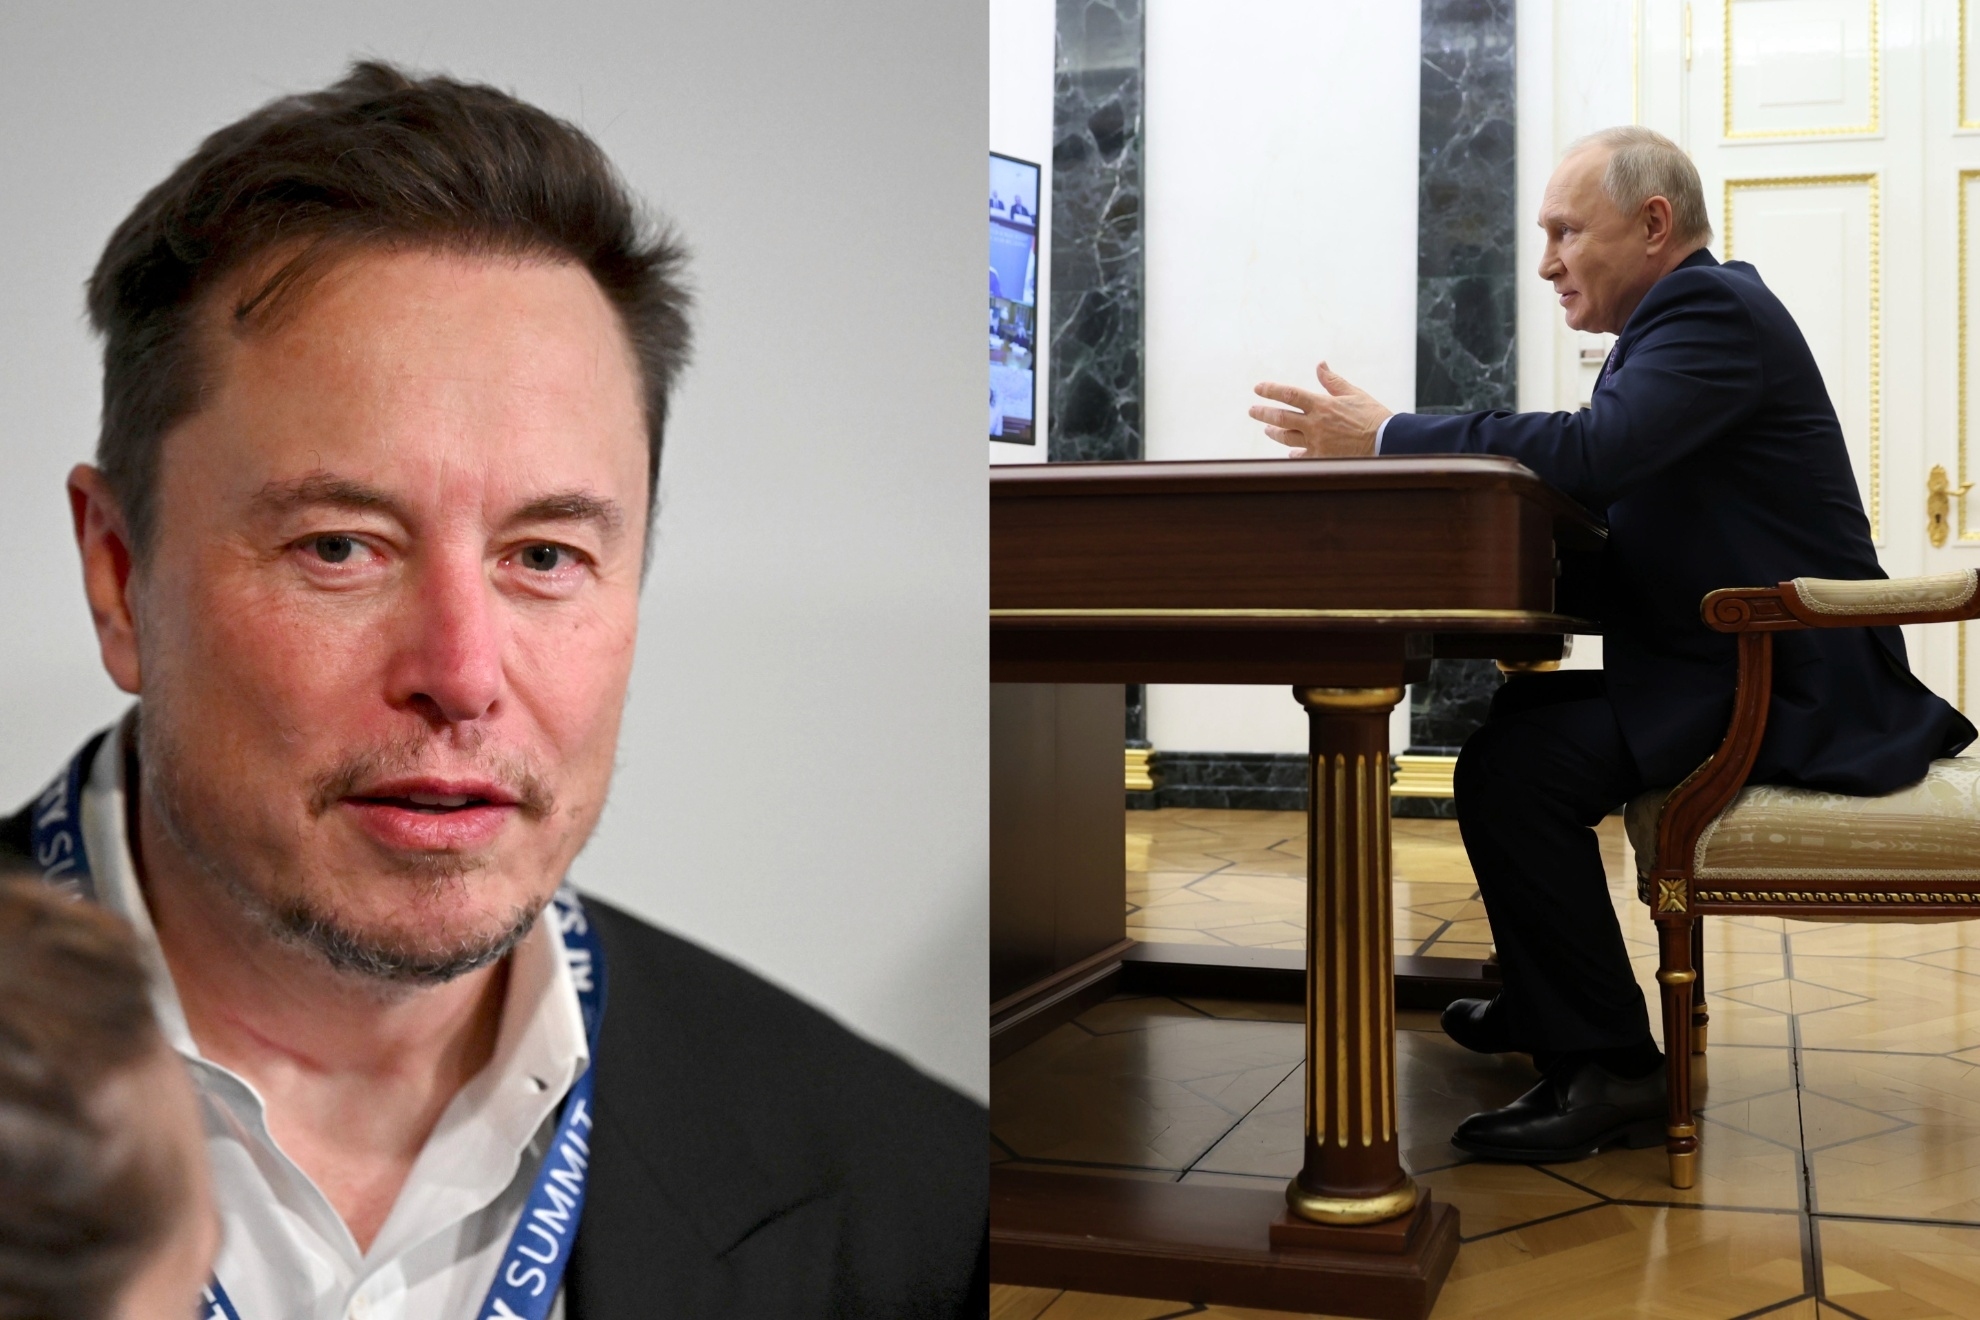 Mashup image of Elon Musk and vladimir Putin